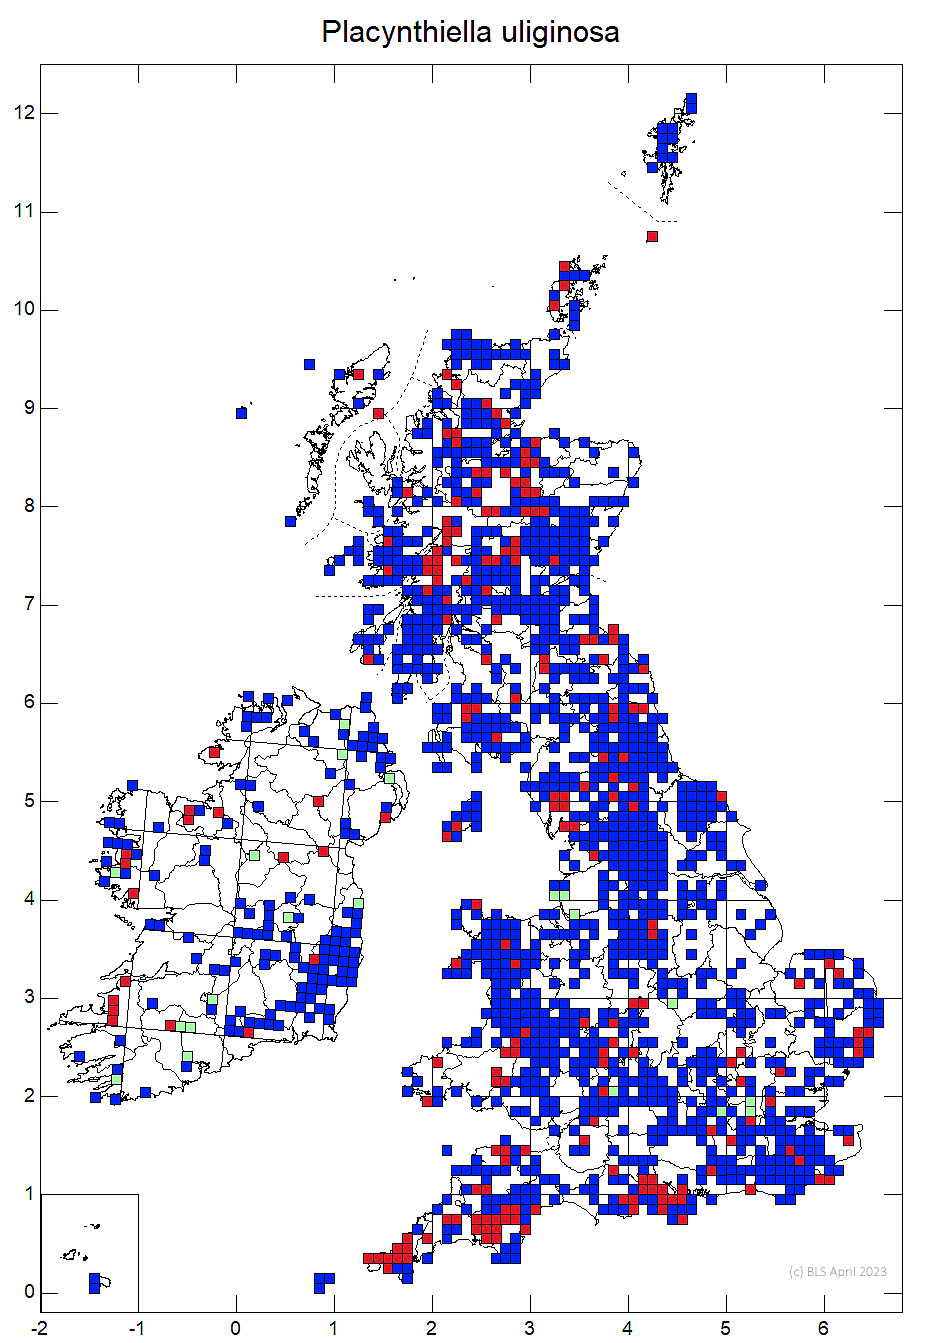 Placynthiella uliginosa 10km sq distribution map